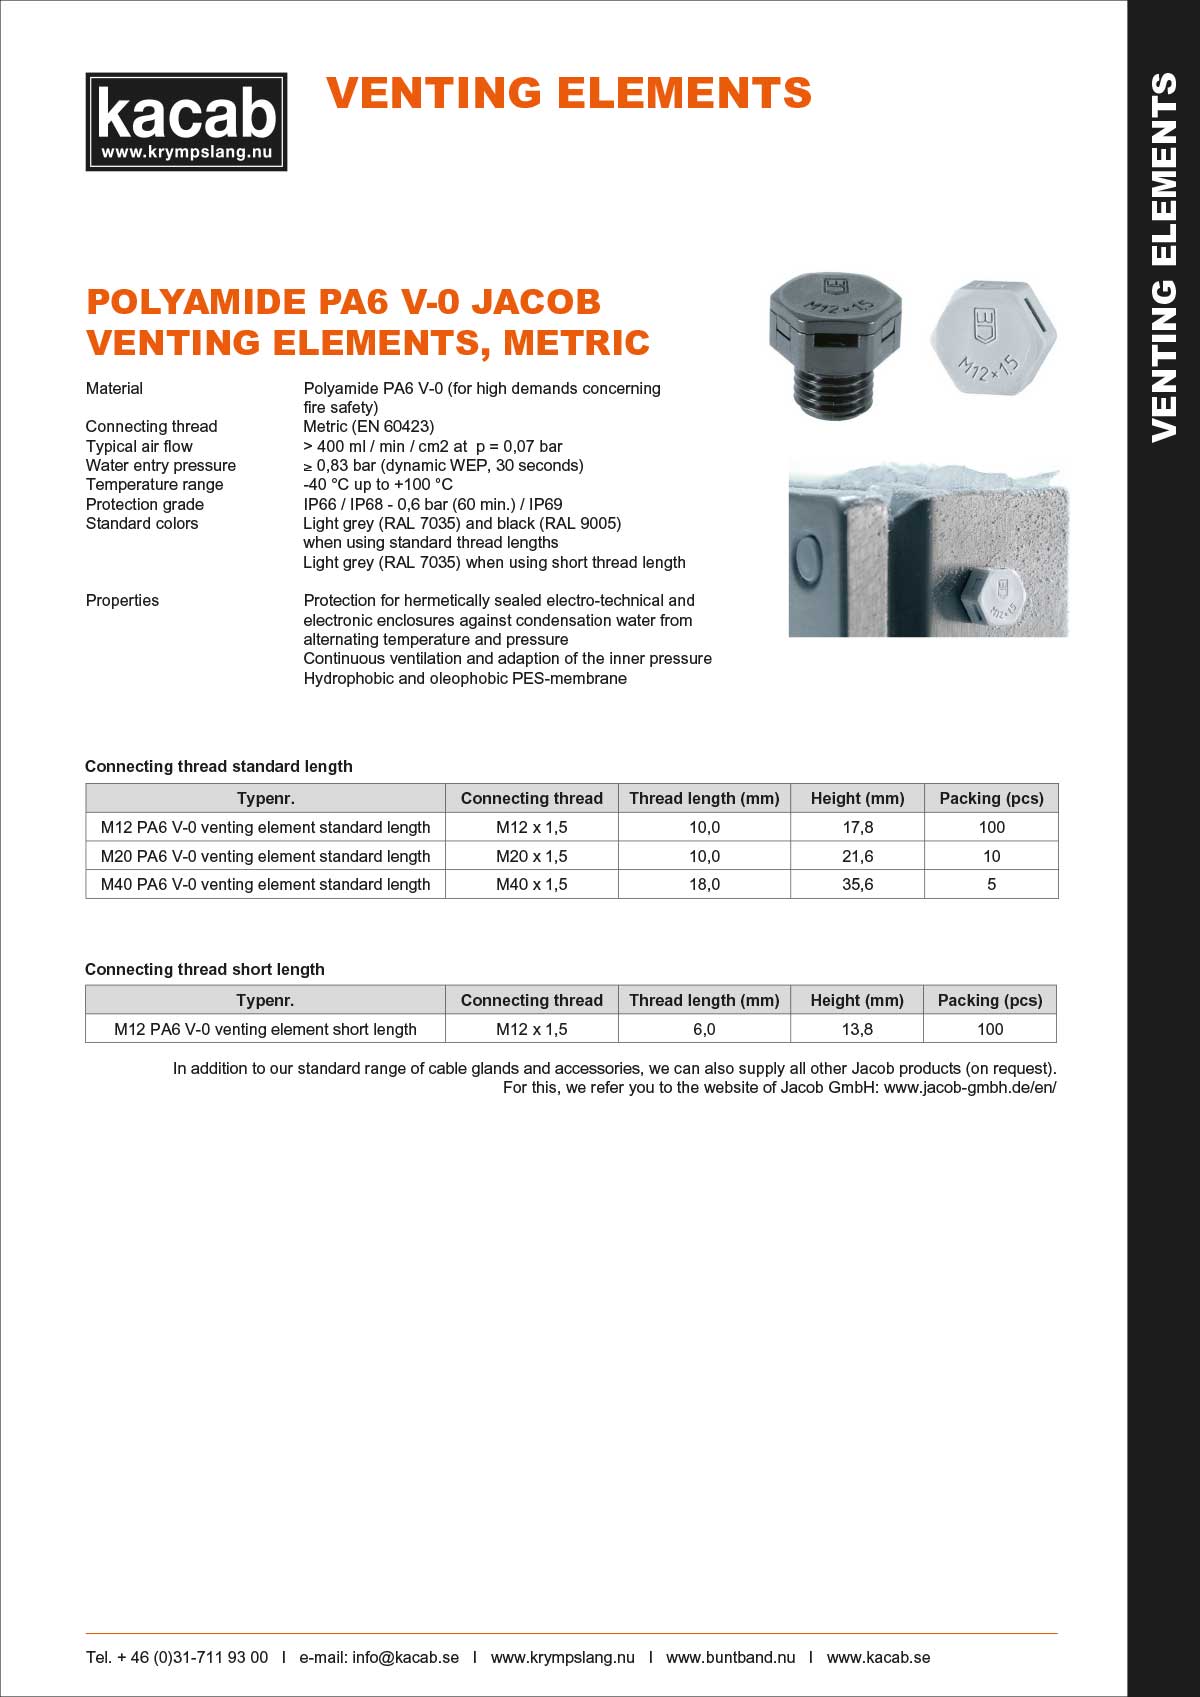 Polyamide PA6 V-0 Jacob venting elements-metric